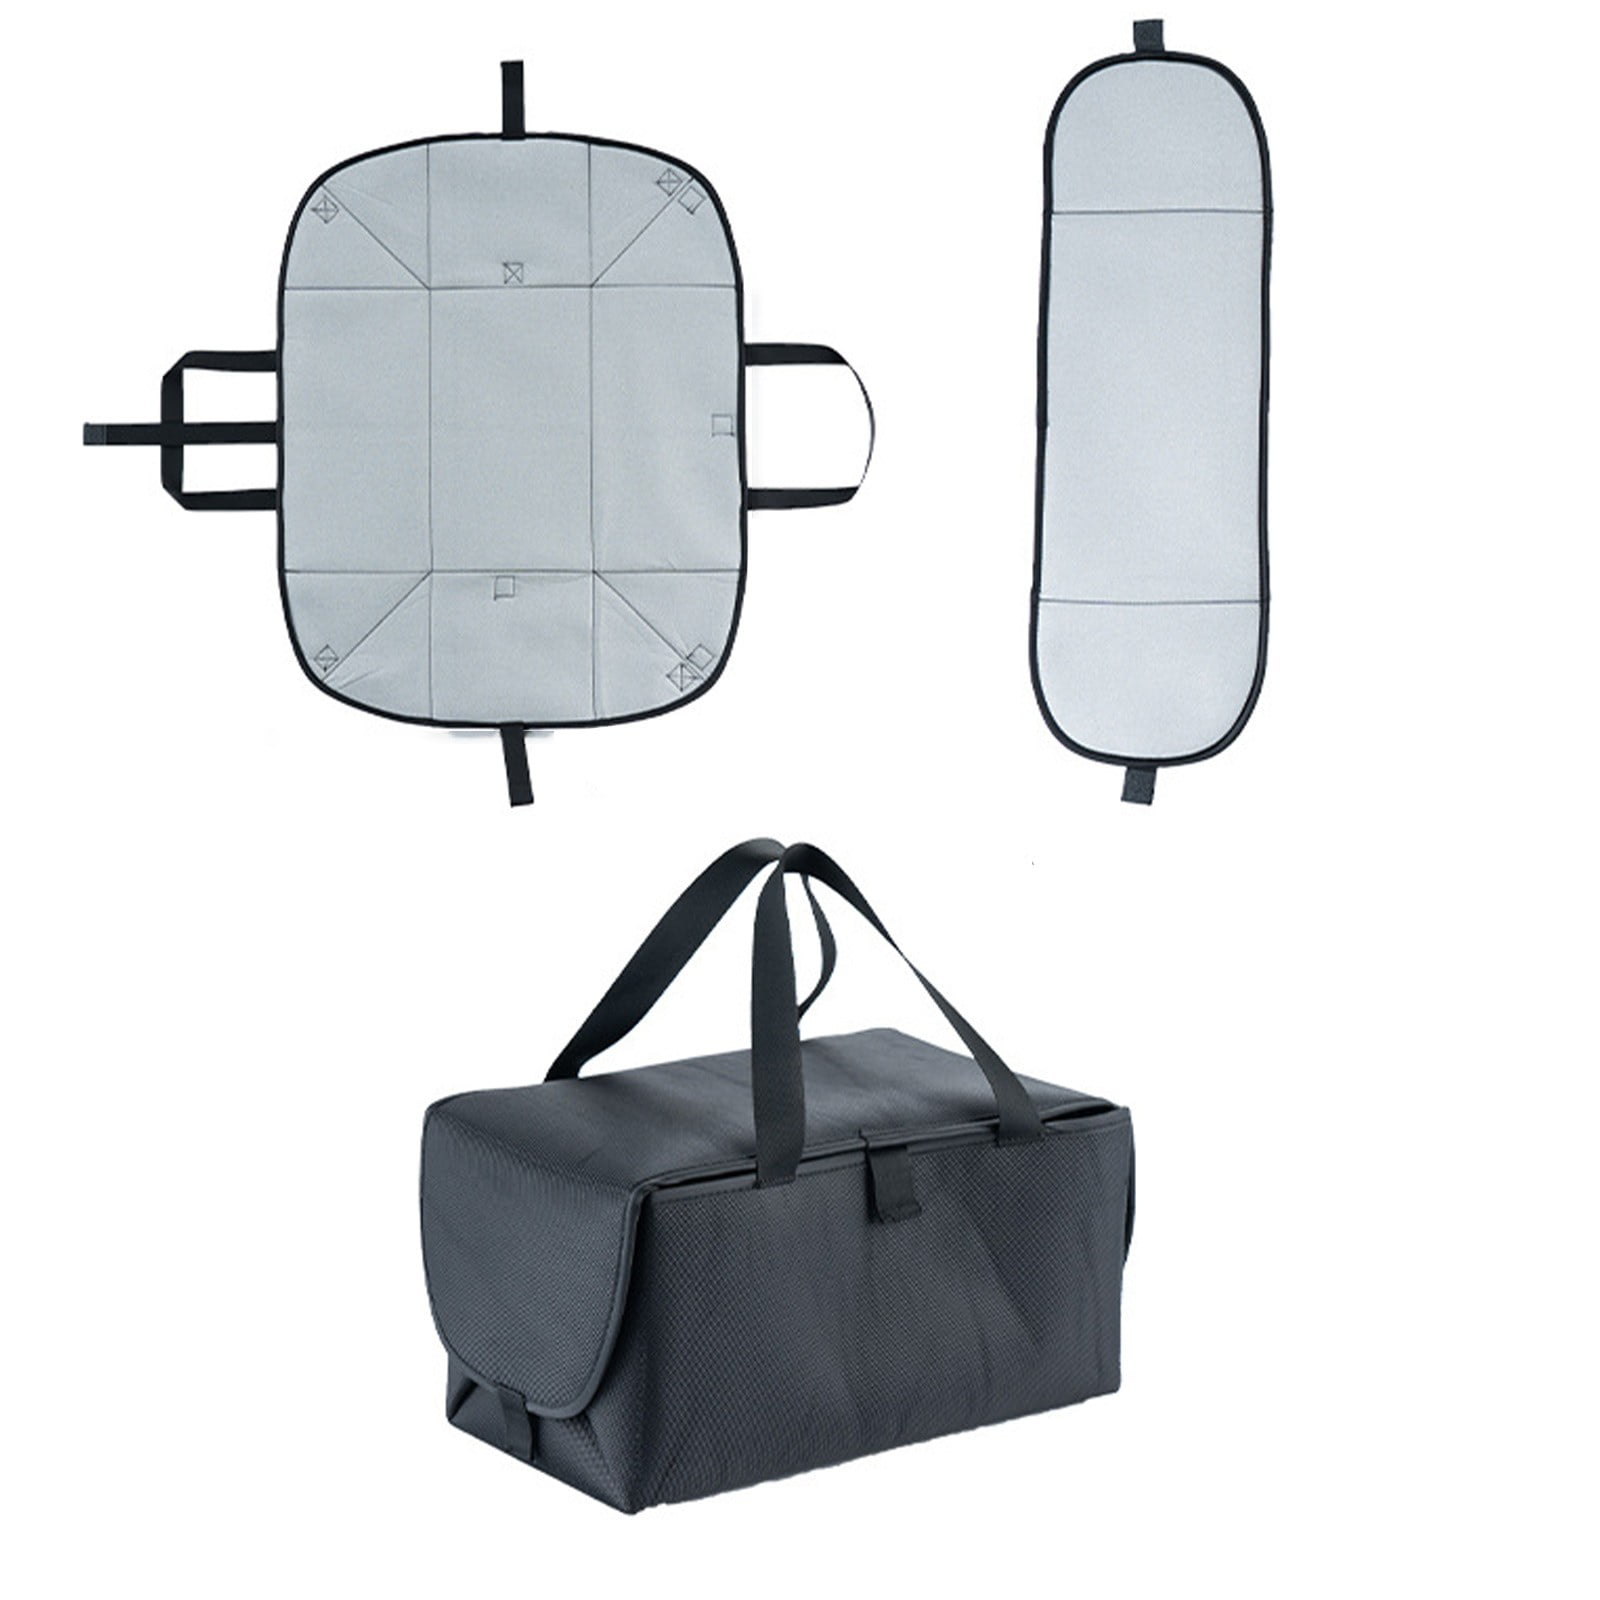 Iron Anywhere – Portable Ironing Mat for Camping Caravan Trips